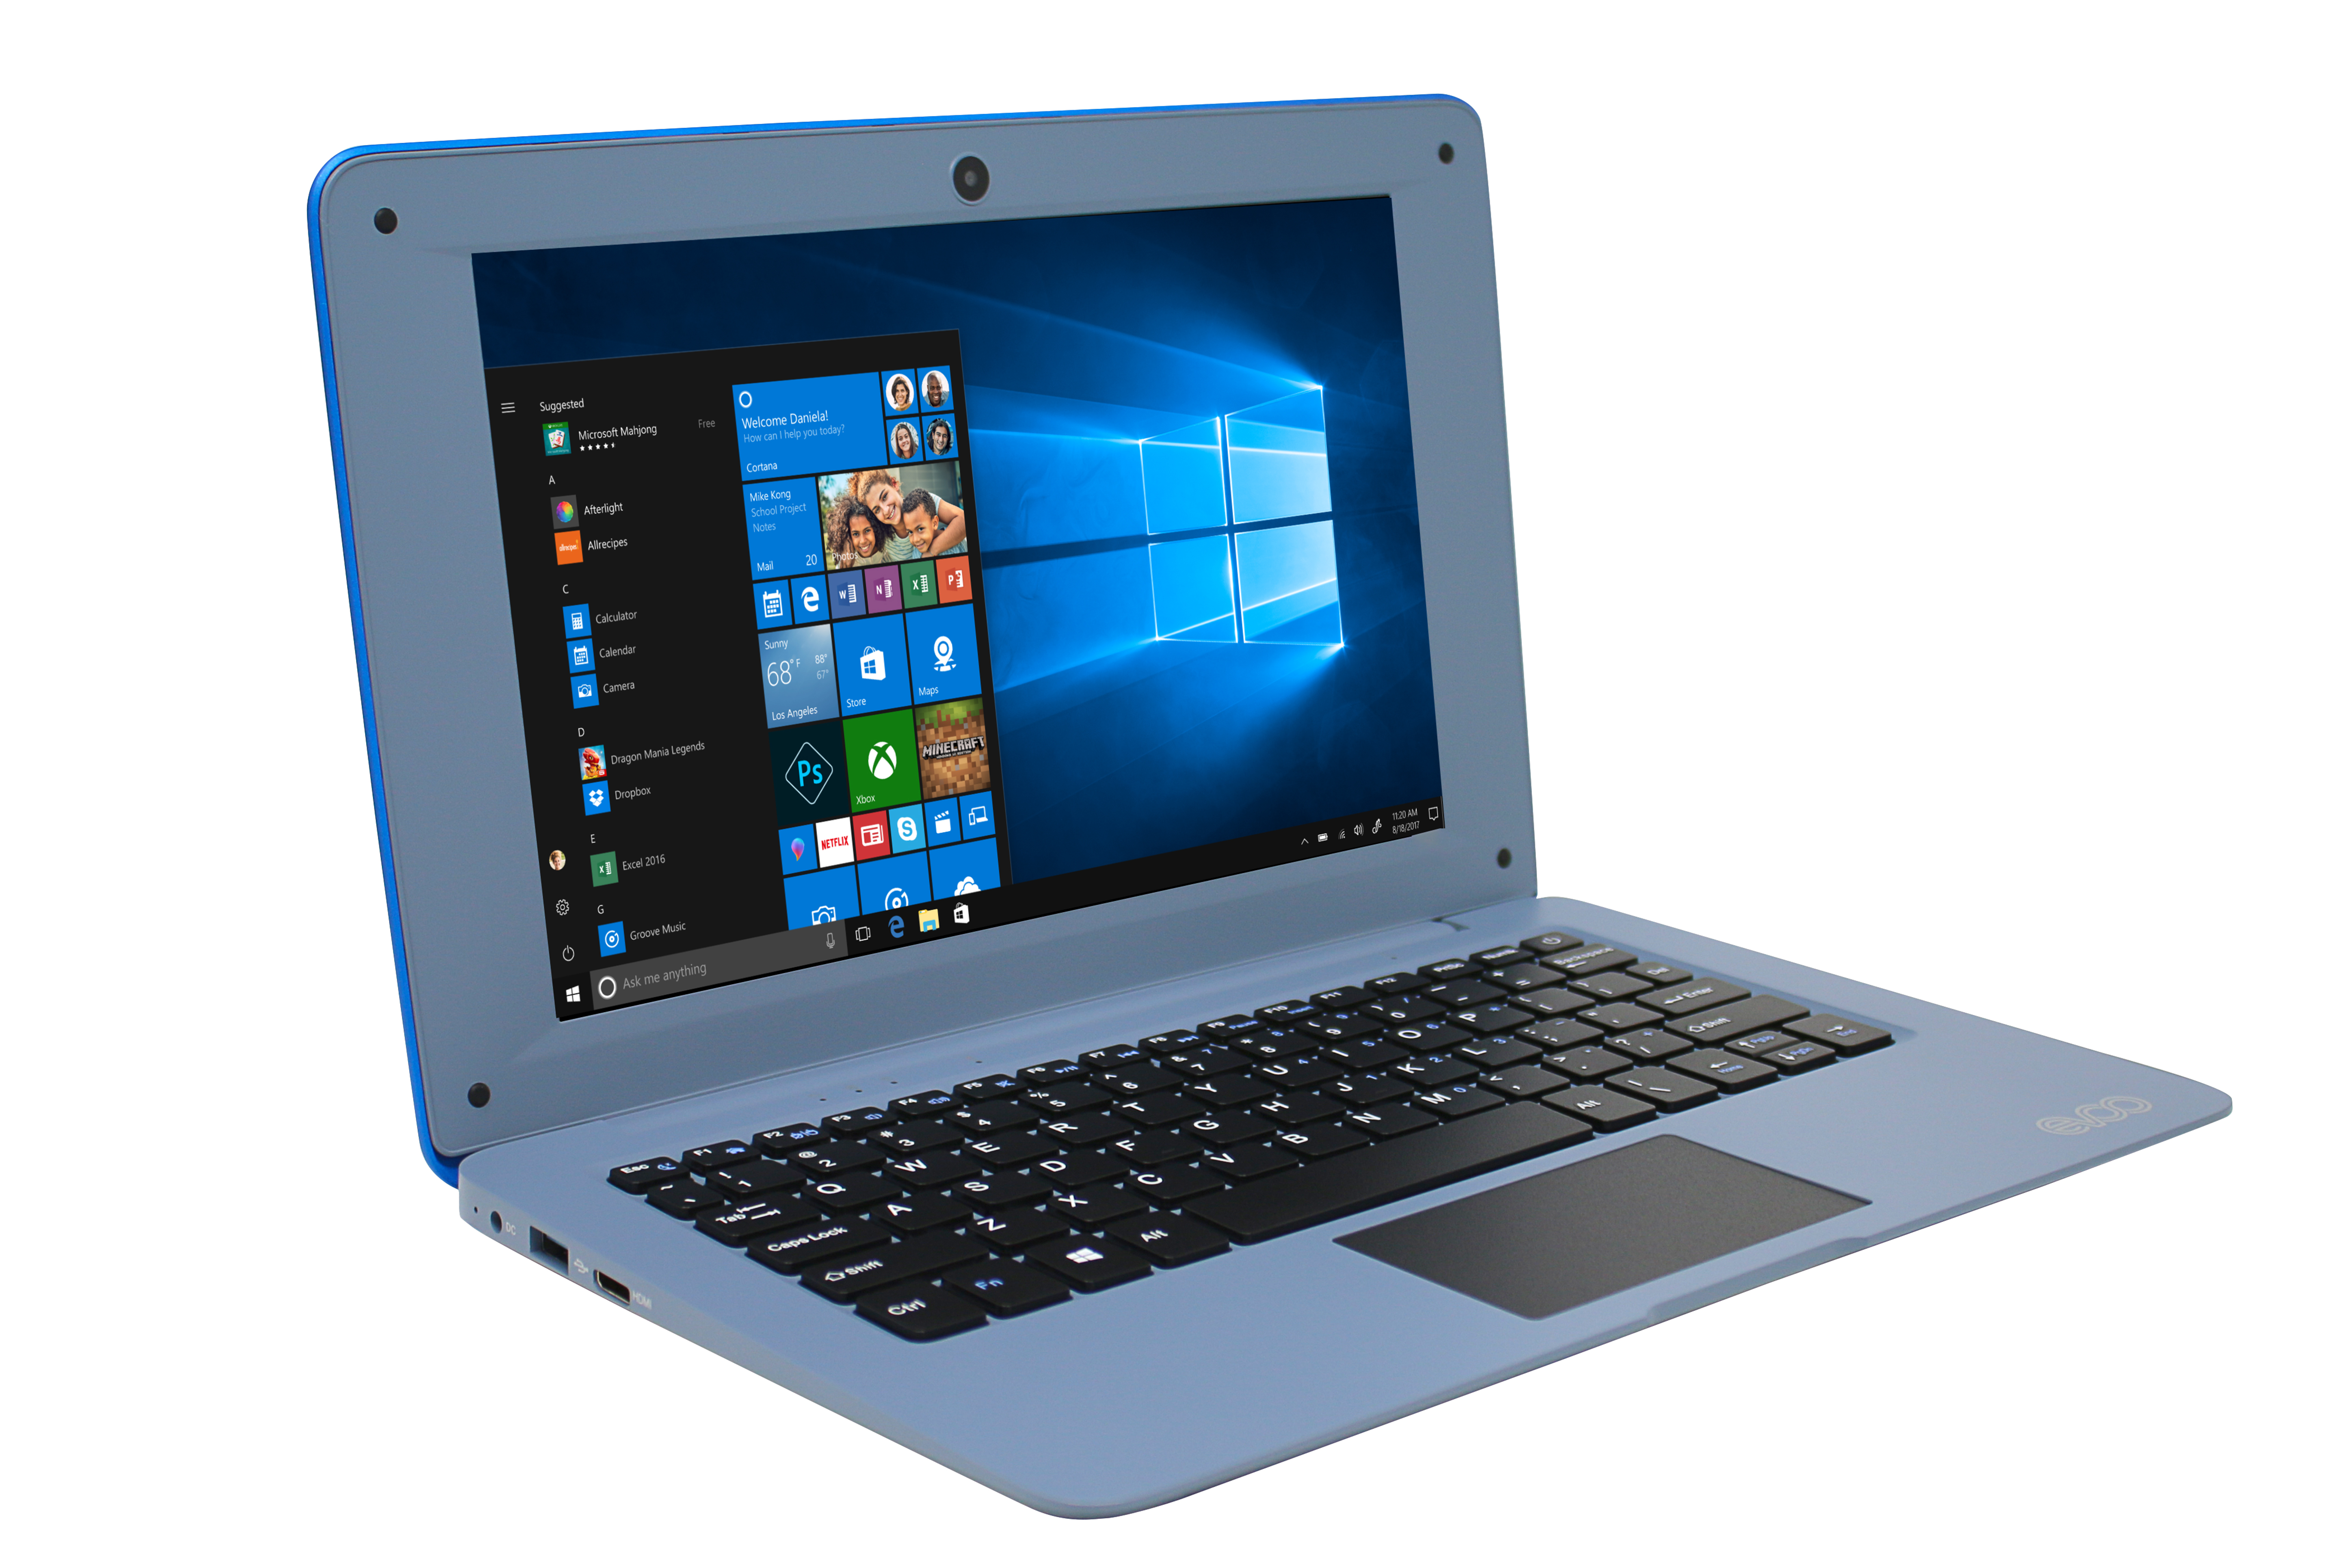 EVOO 10.1" Ultra Thin Laptop, Quad Core Processor, 2GB Memory, 32GB Storage, Mini HDMI, Front Camera, Windows 10 Home, Blue - image 4 of 7